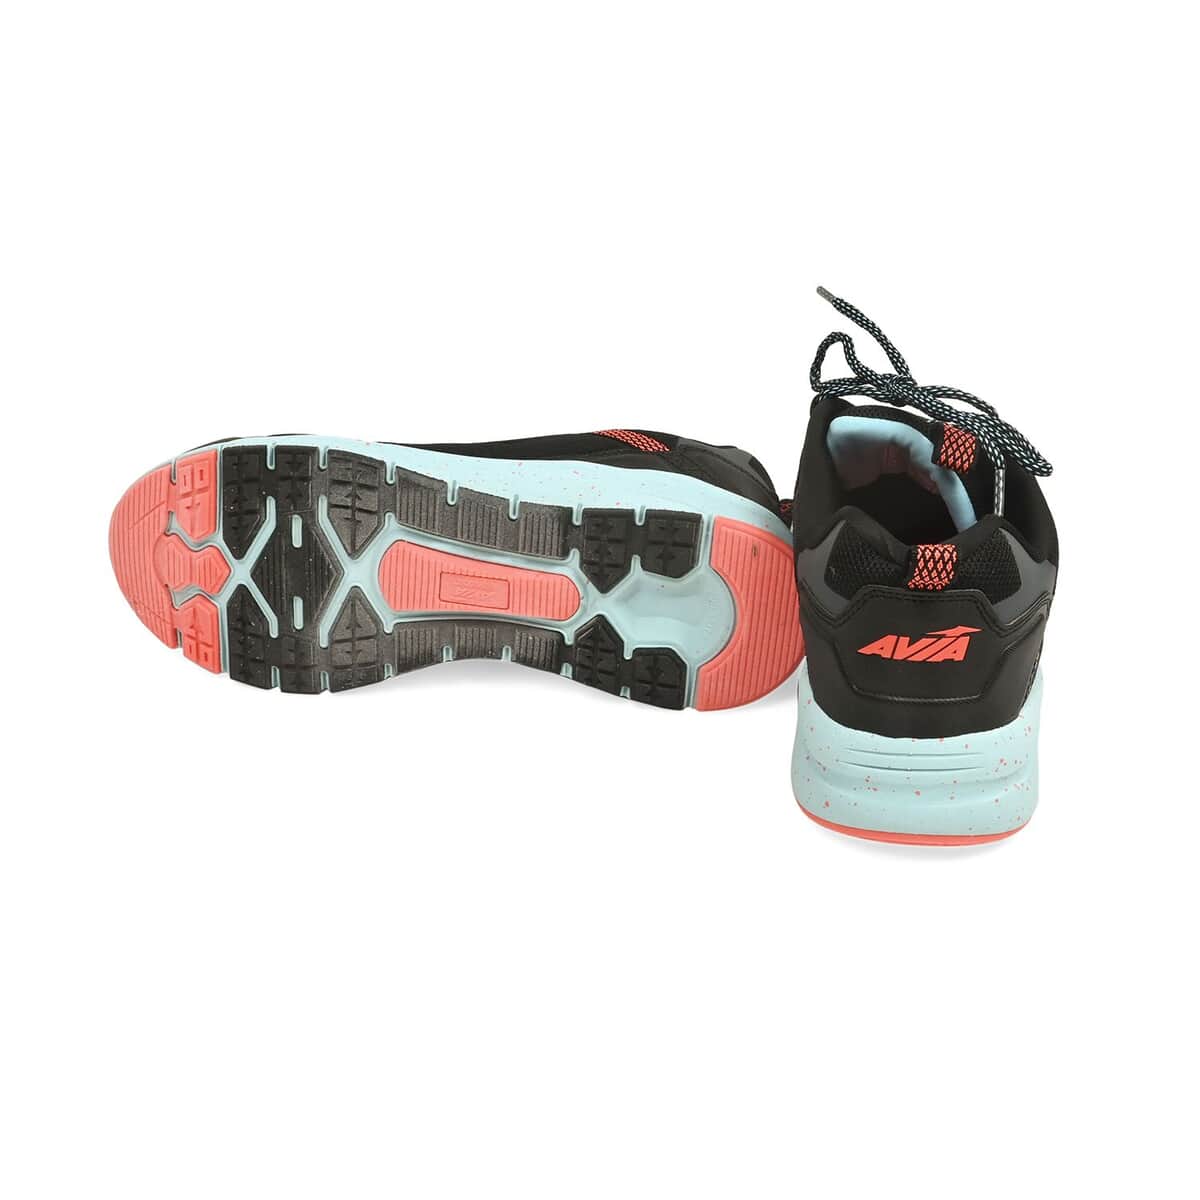 Avia Black and Orange Canyon 2.0 Women's Tennis Shoe (Size 7.00) image number 5